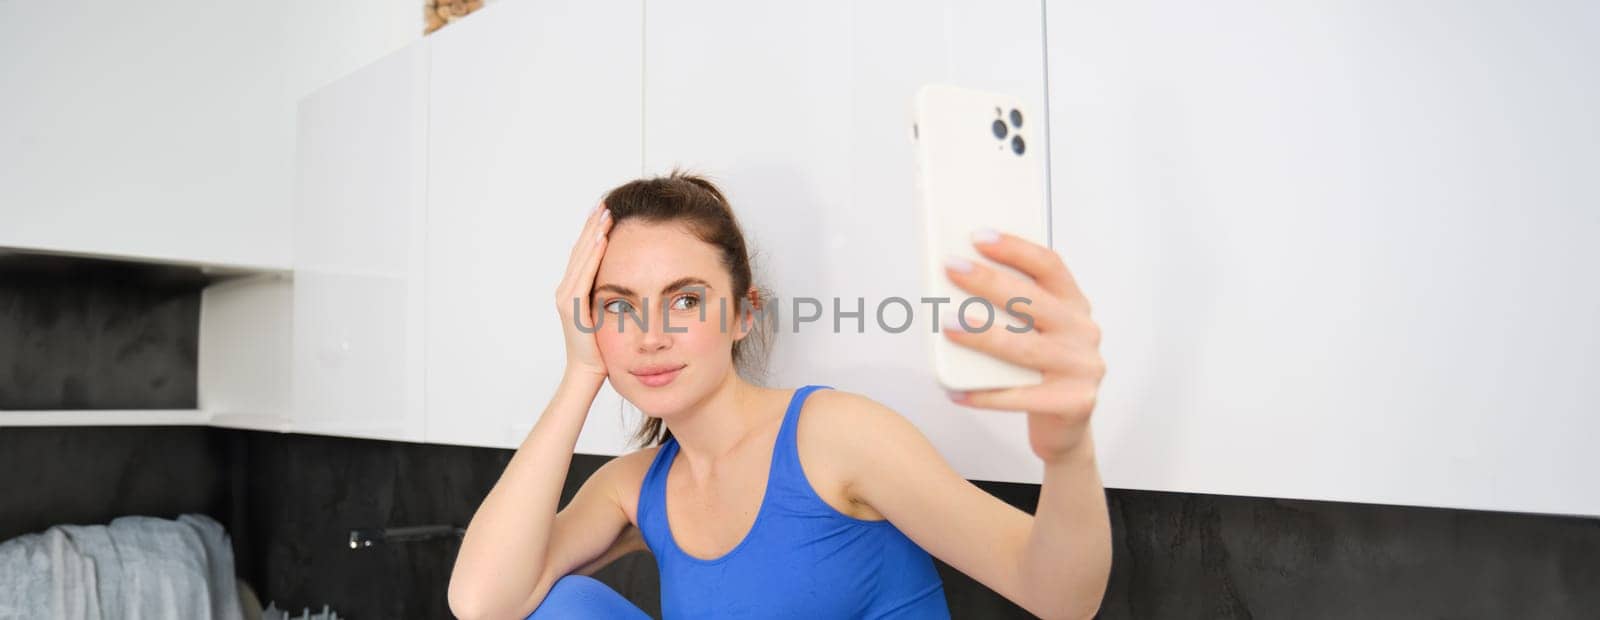 Portrait of beautiful sportswoman, wearing sportsbra and leggings, sitting in kitchen and taking selfie, posing for photo on smartphone app.